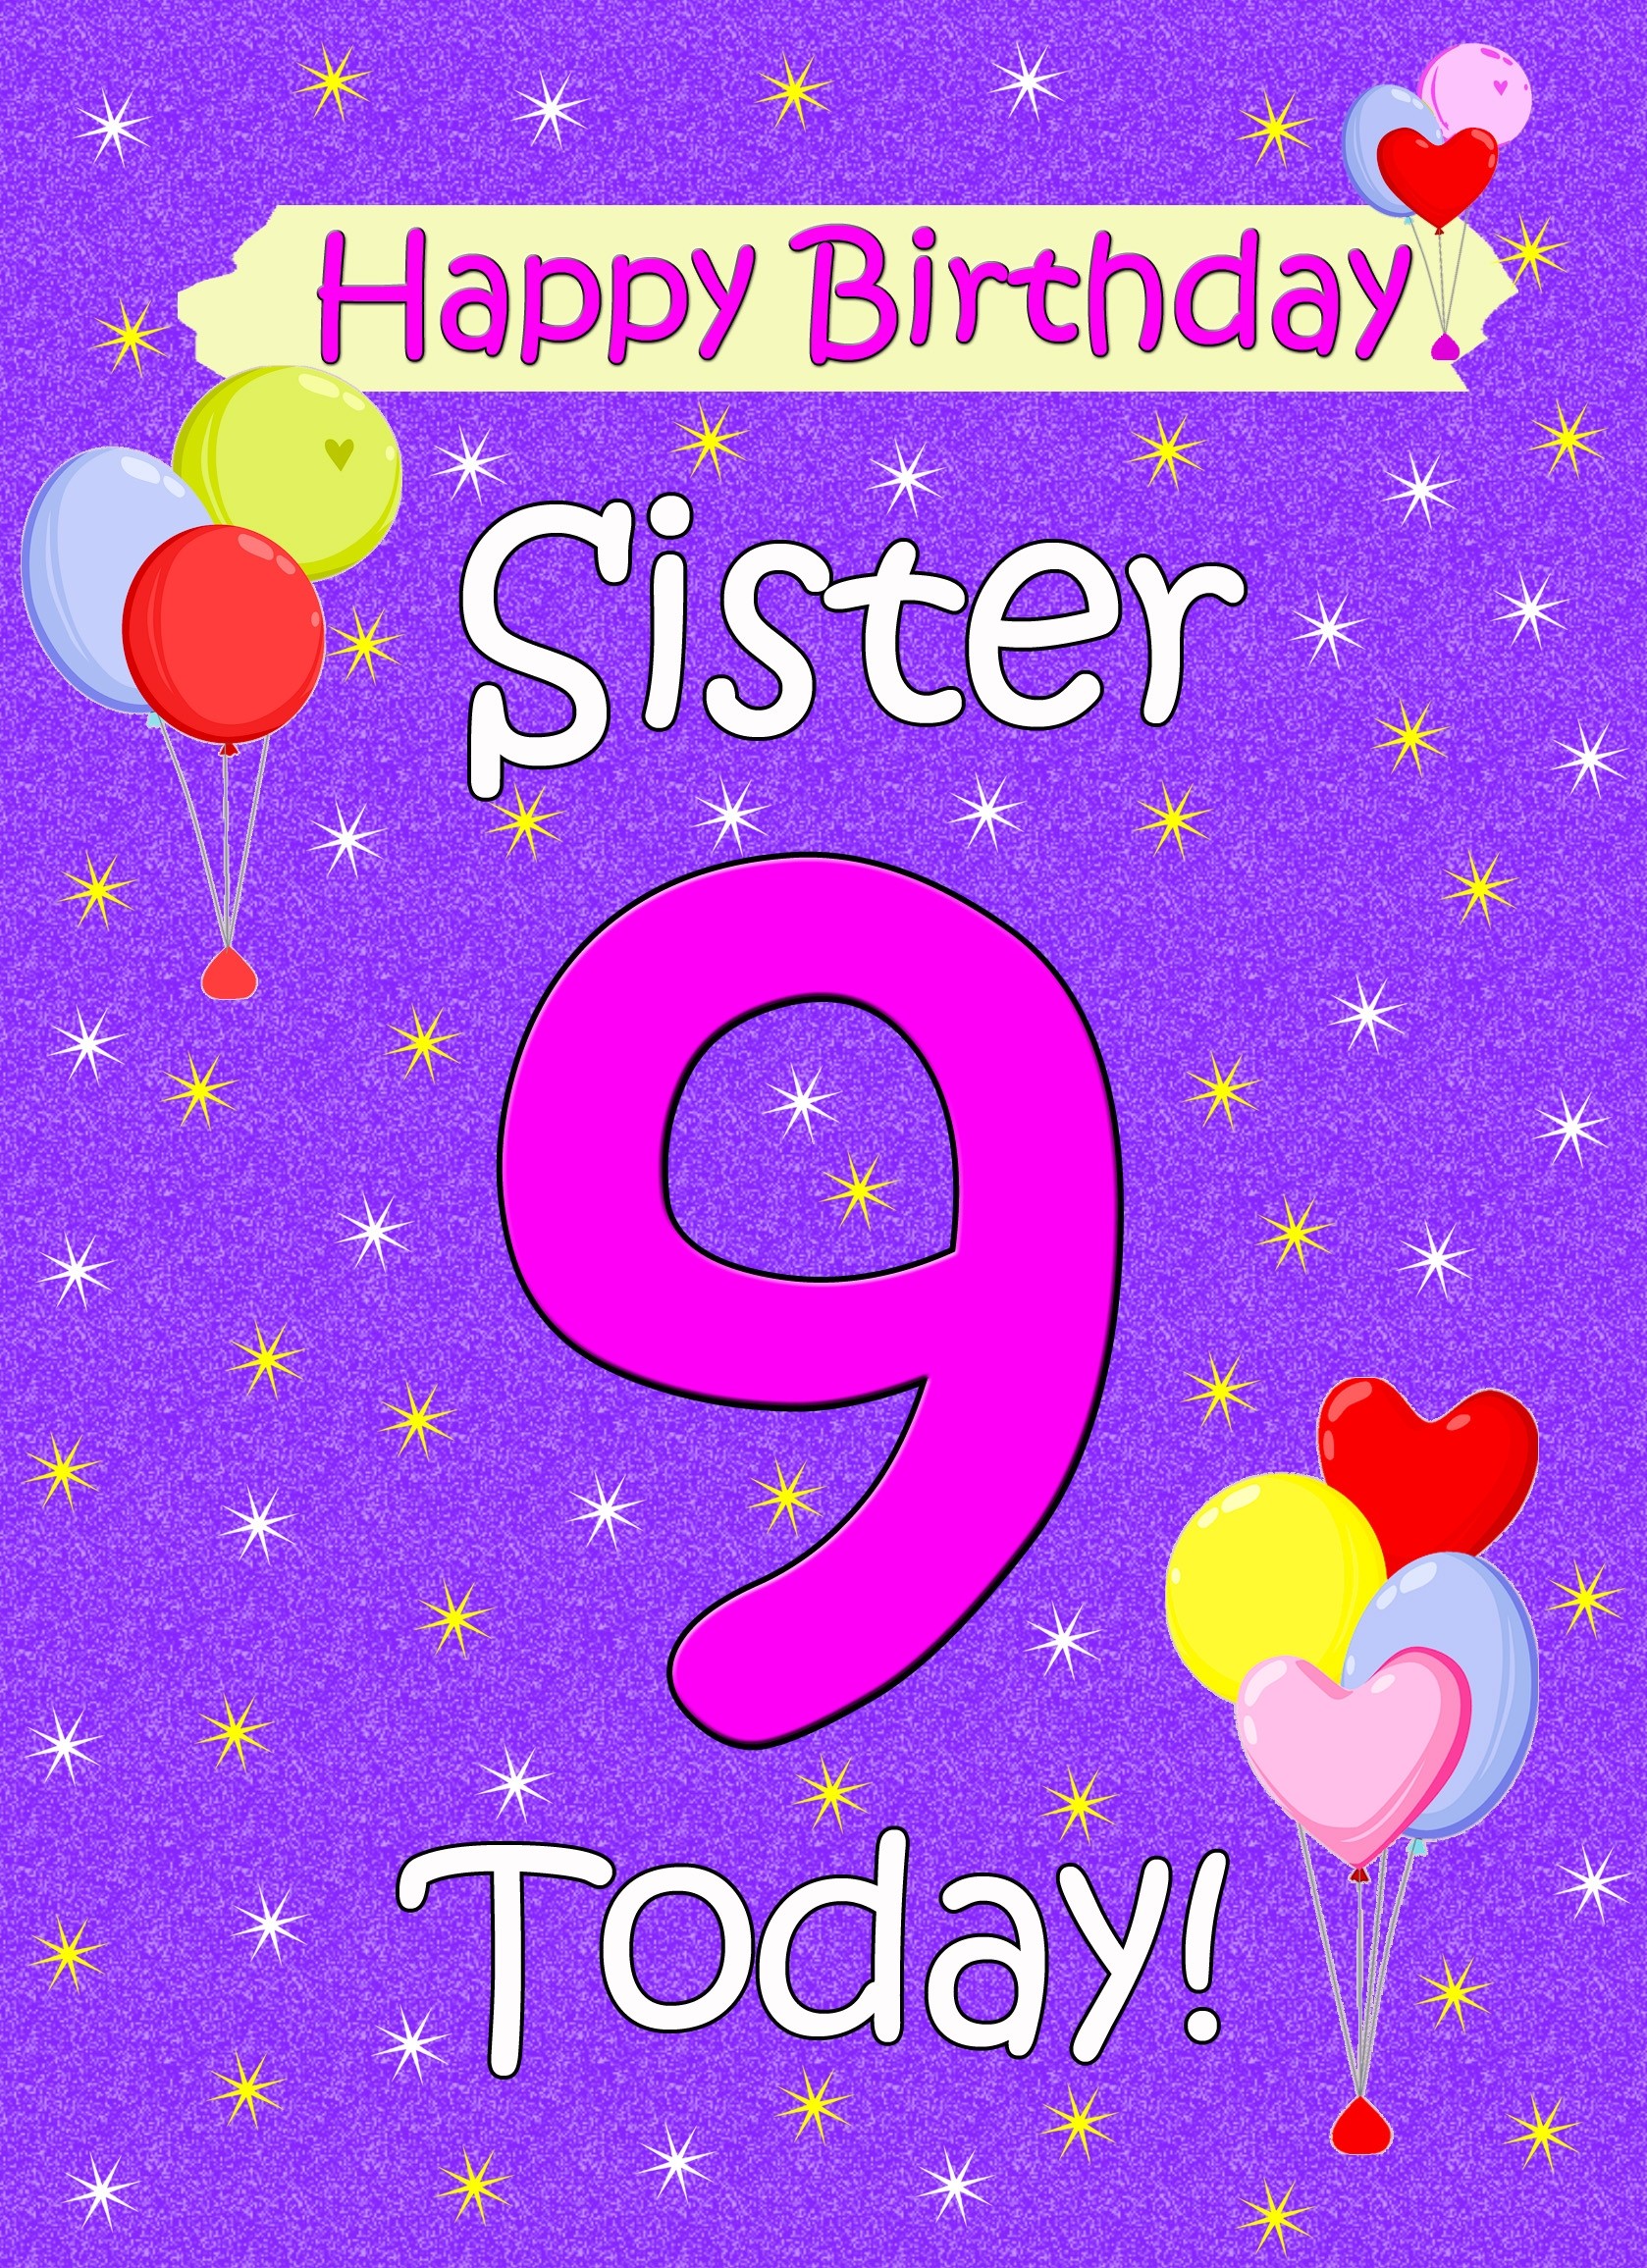 Sister 9th Birthday Card (Lilac)